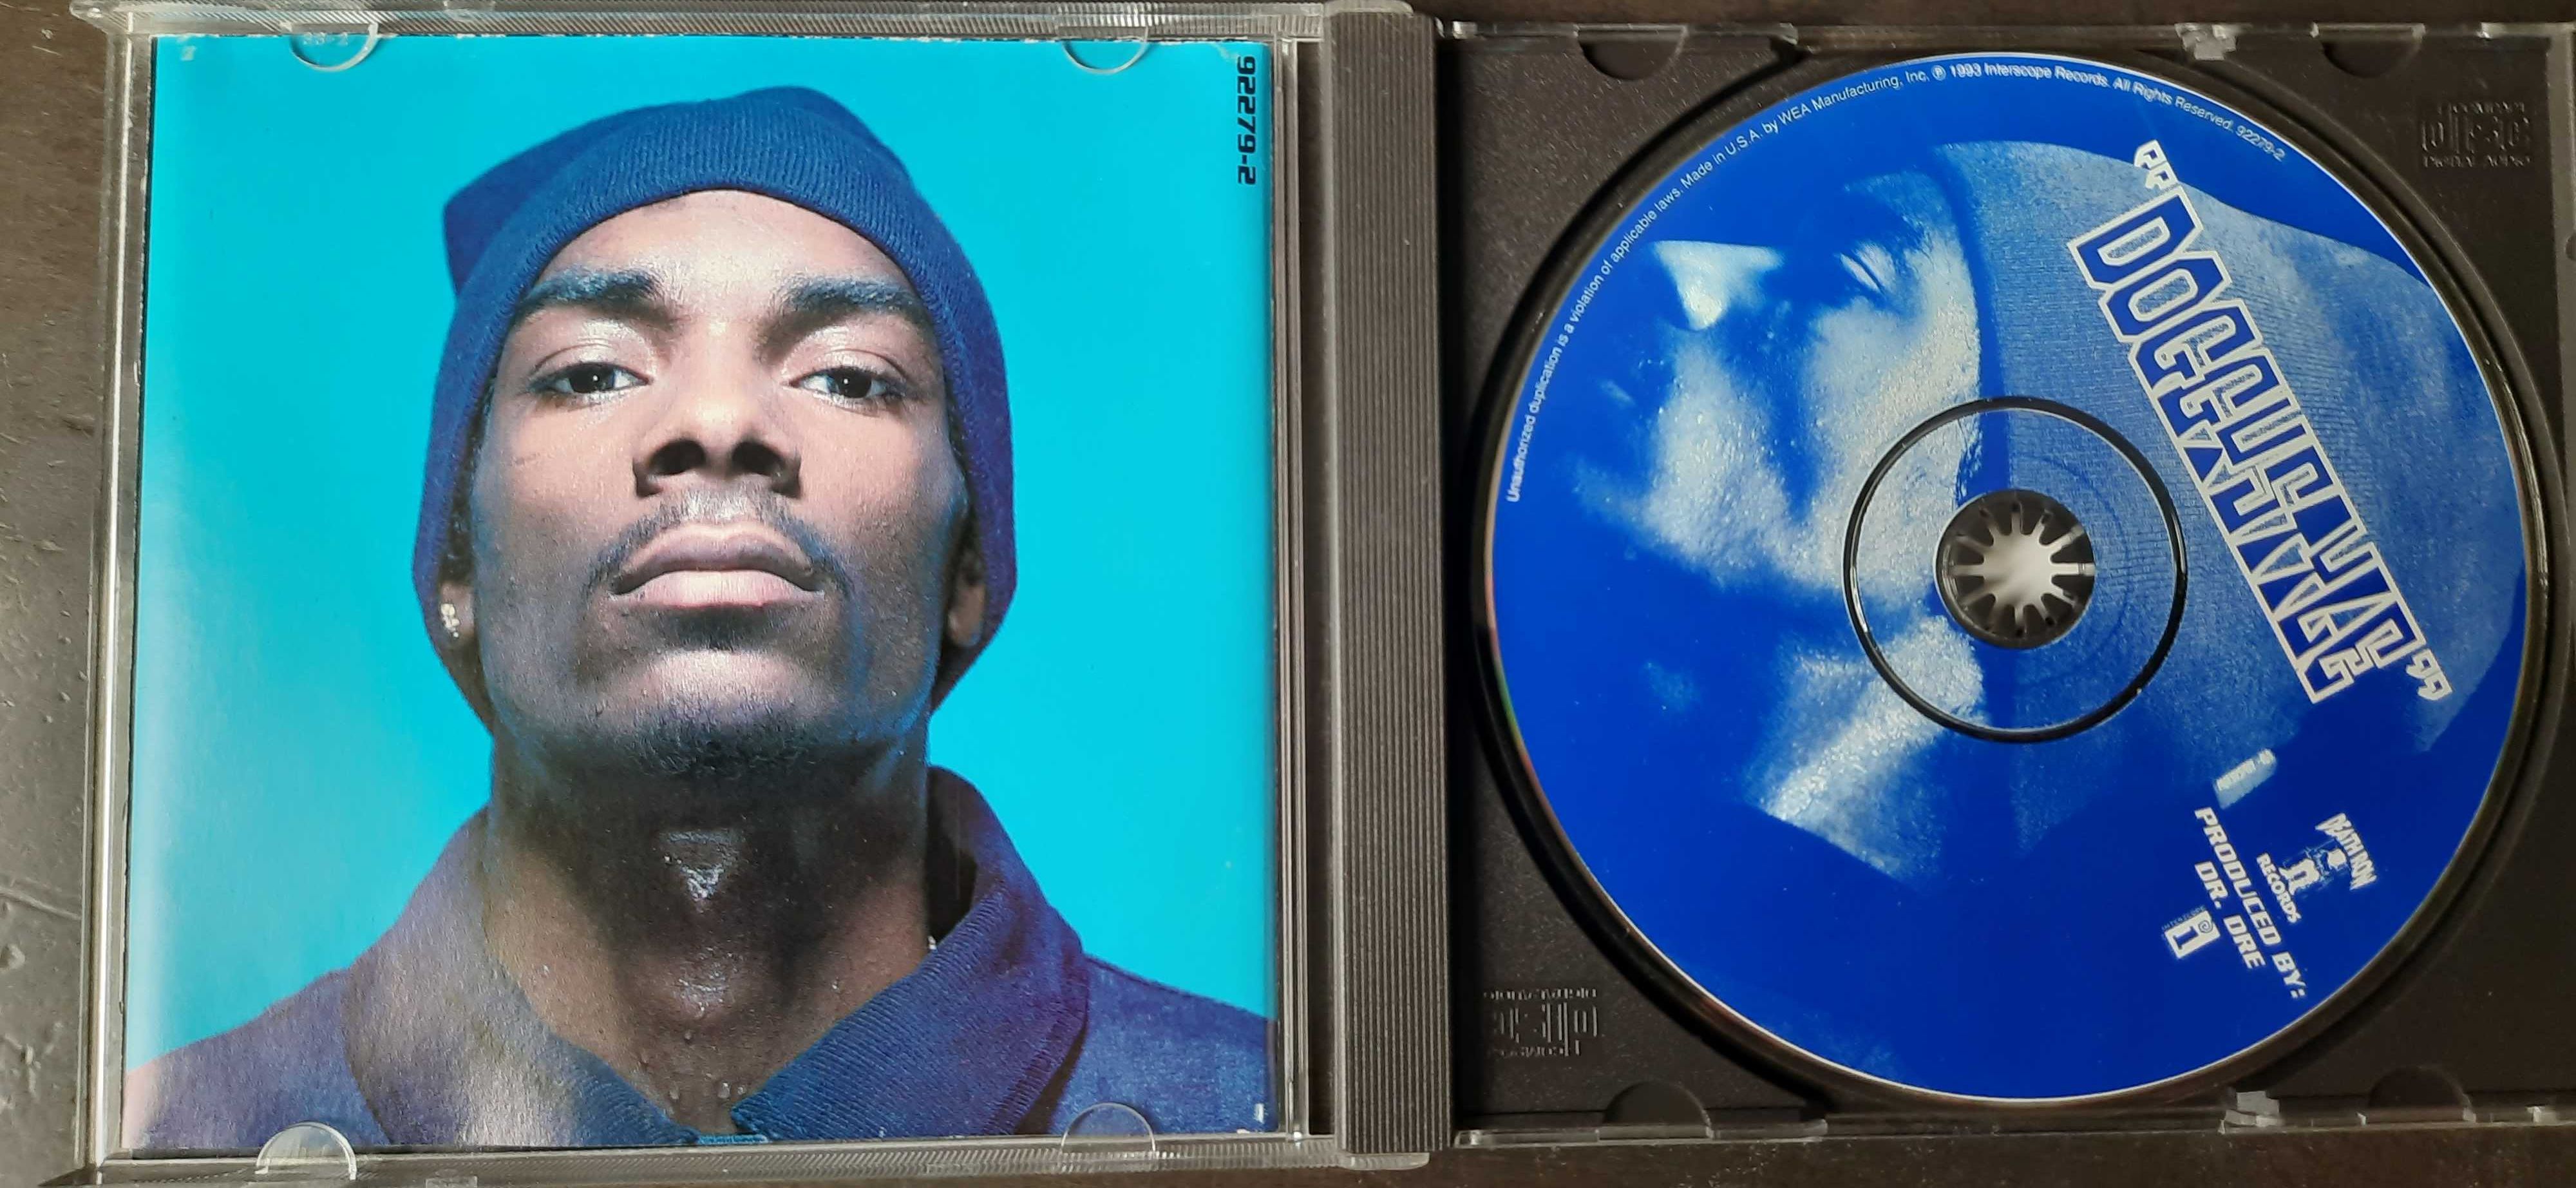 Snoop Doggy Dogg* - Doggystyle
CD, Album